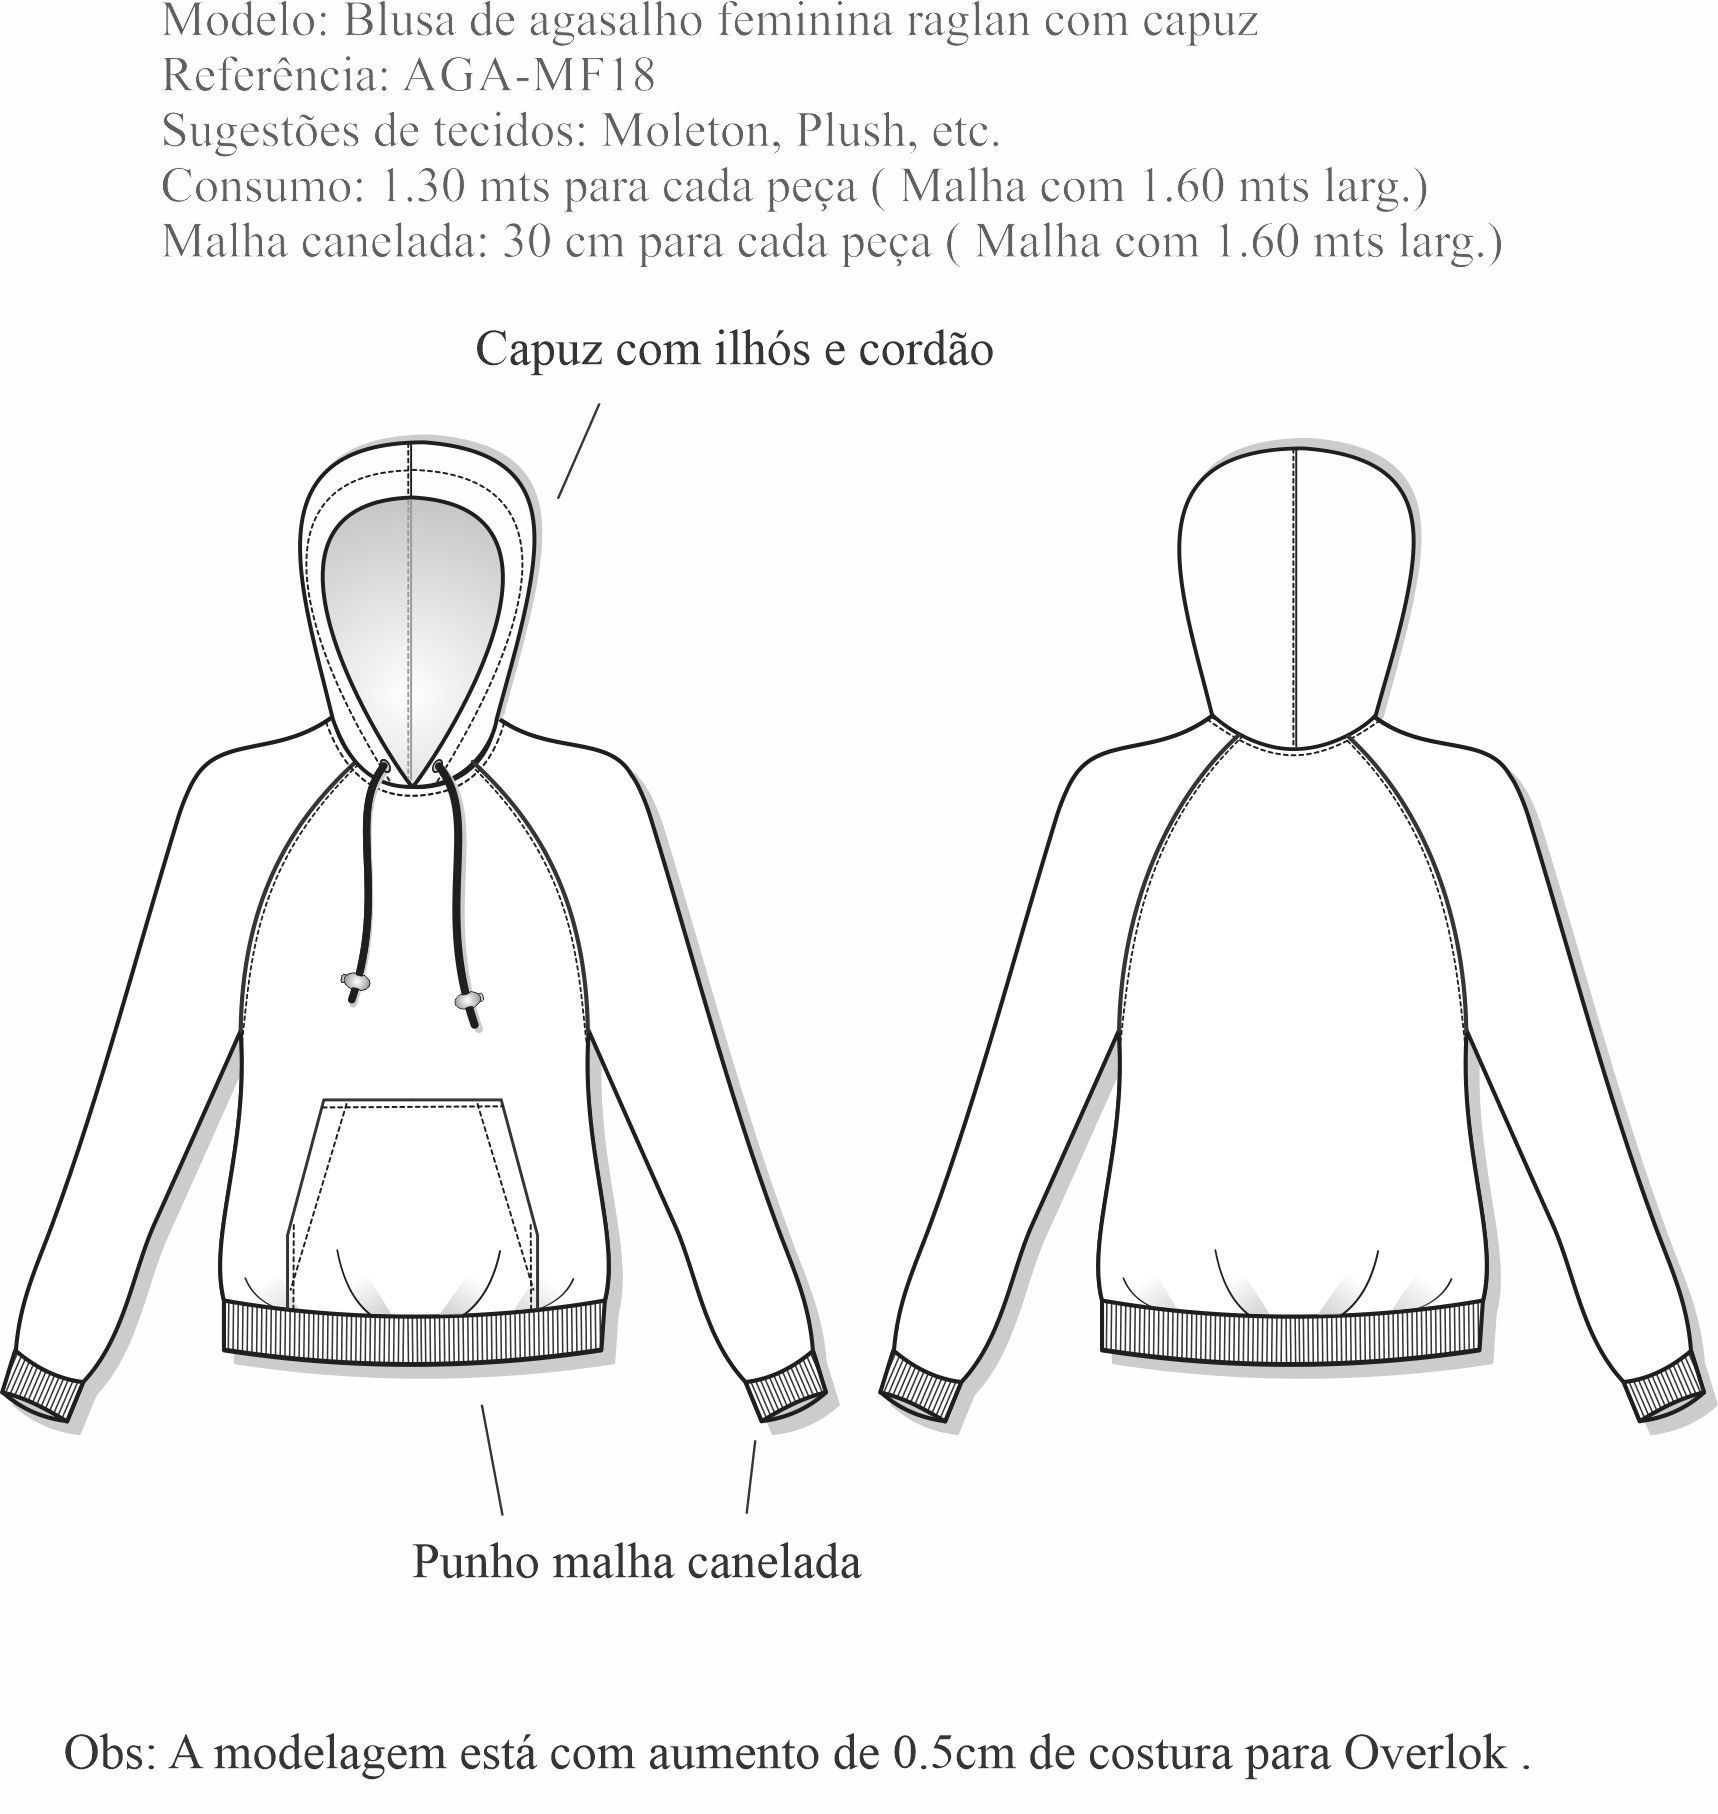 Blusa de Agasalho Feminina Raglan com Capuz (AGA-MF18) - Foto 1